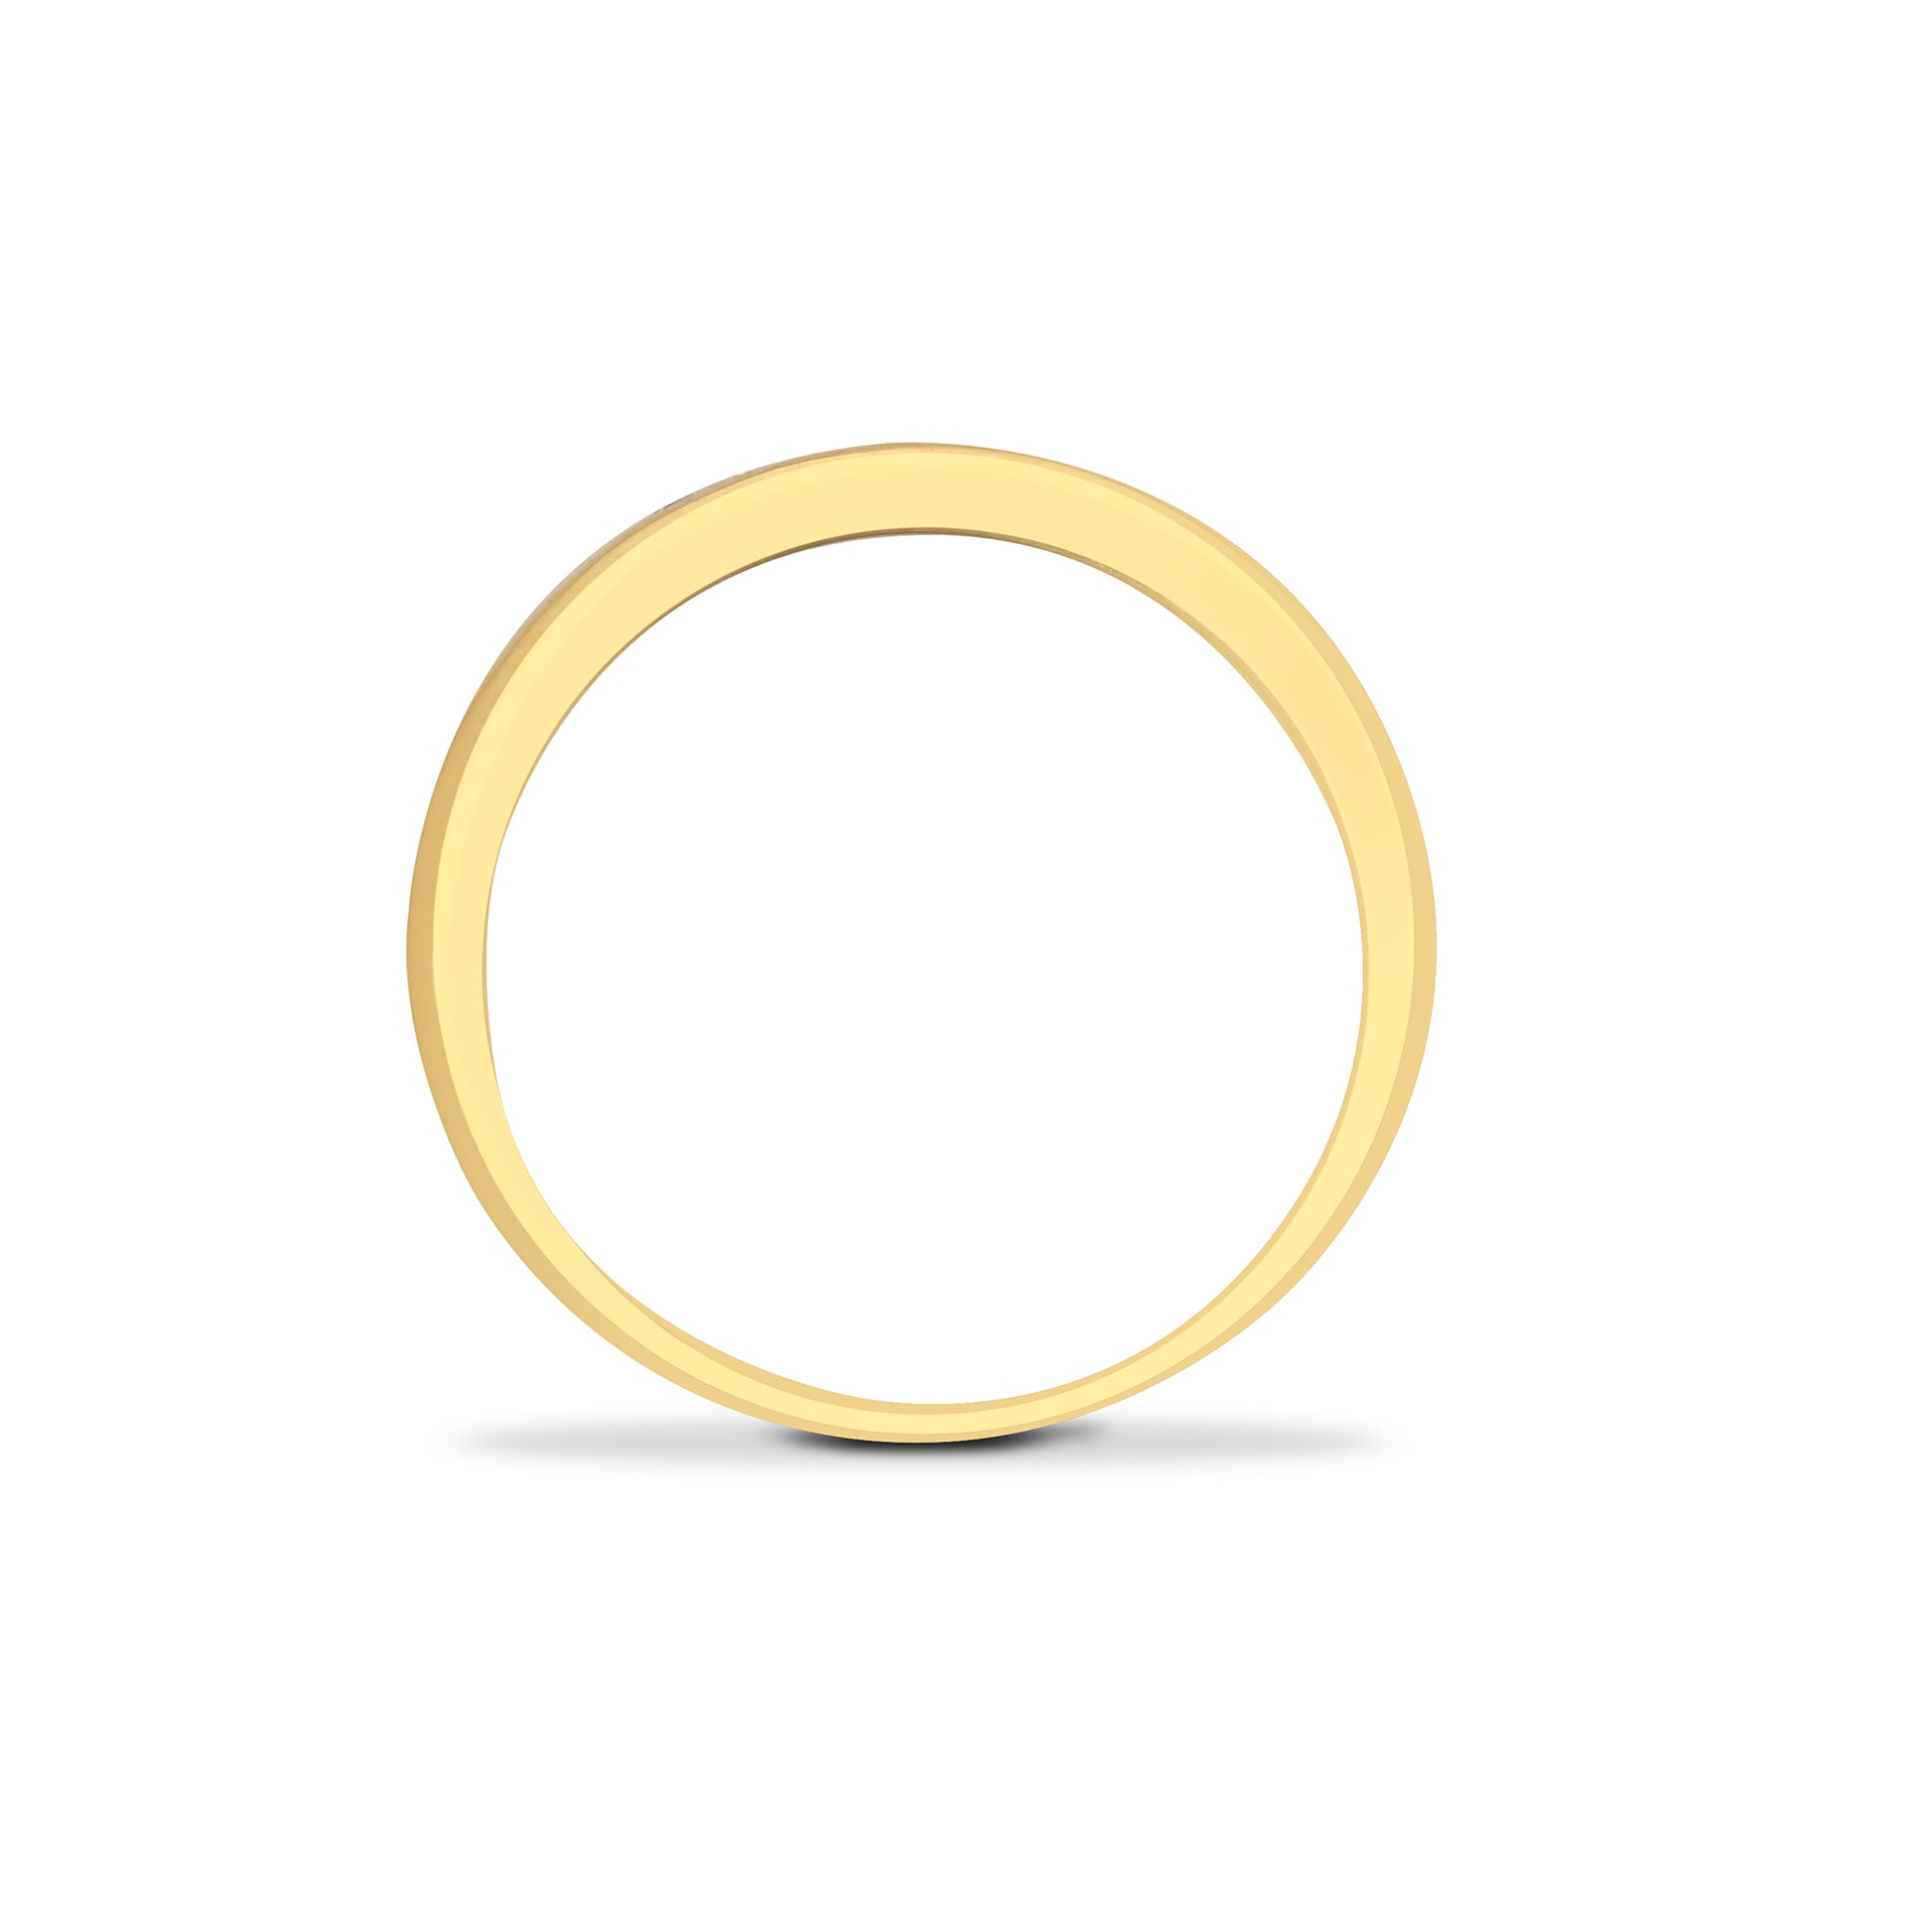 9ct Gold  0.25ct Diamond Dainty Band Eternity Ring 3mm - 9R027